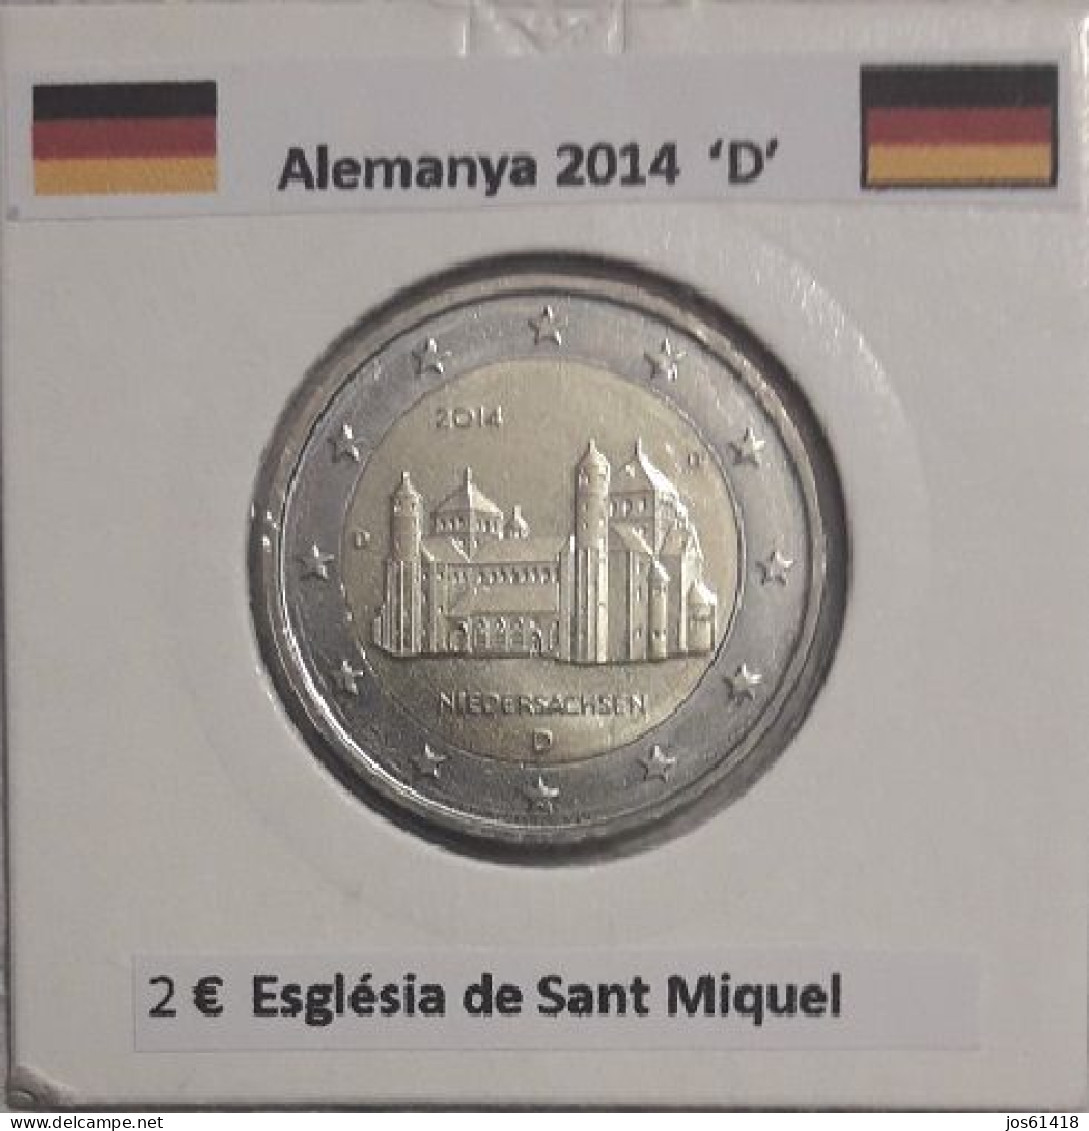 2 Euros Alemania / Germany  2014 Niedersachsen  D,G O J Sin Circular - Germany